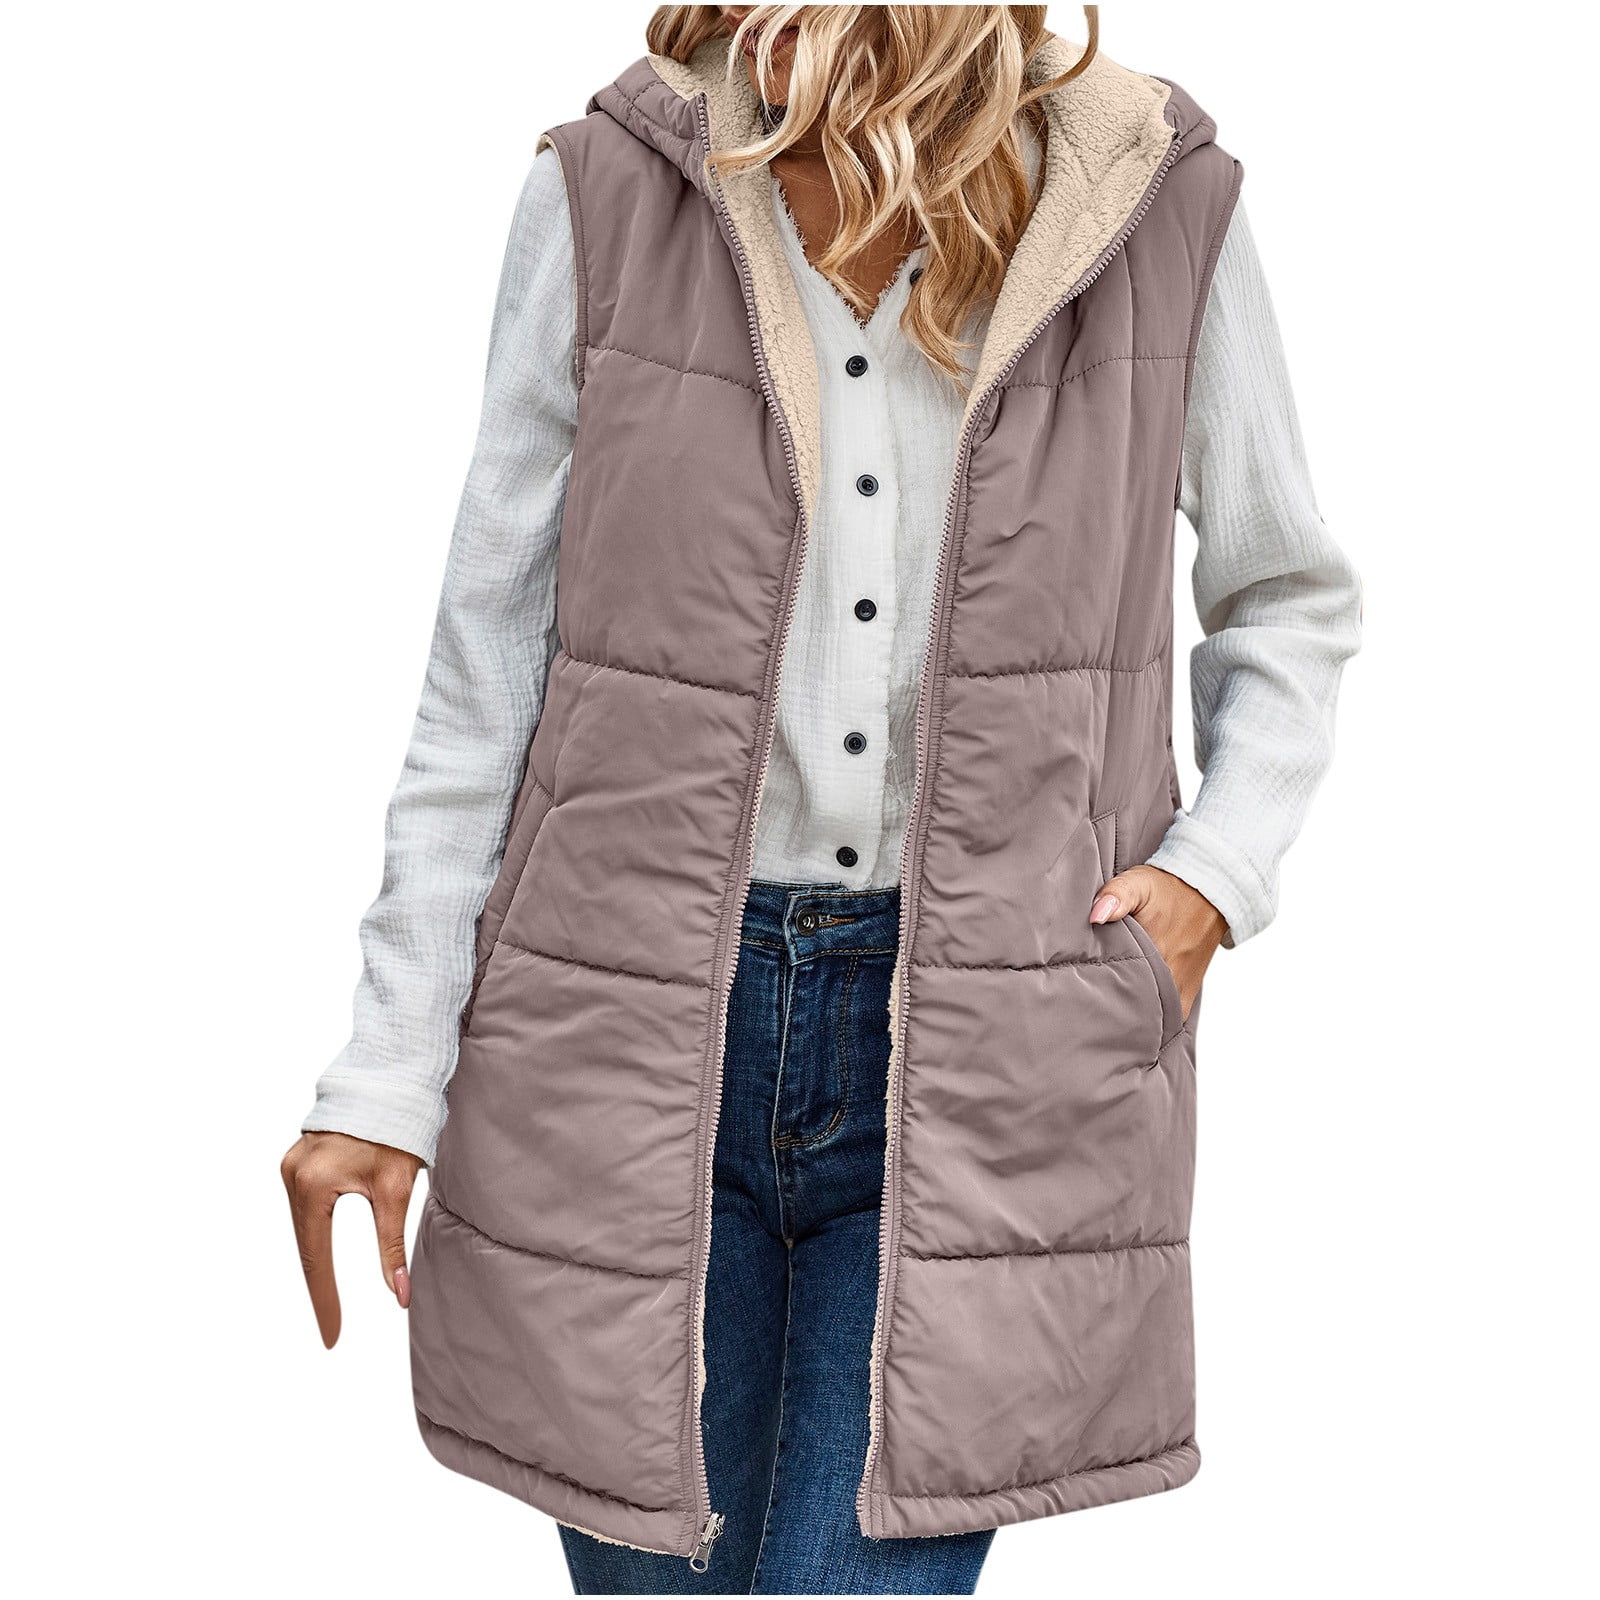 Noarlalf Womens Winter Coats, Fleece Jacket Women, Women's Solid Color  Sleeveless Short Cotton Jacket with Cotton Zipper Pocket Vest Jacket Vests  for